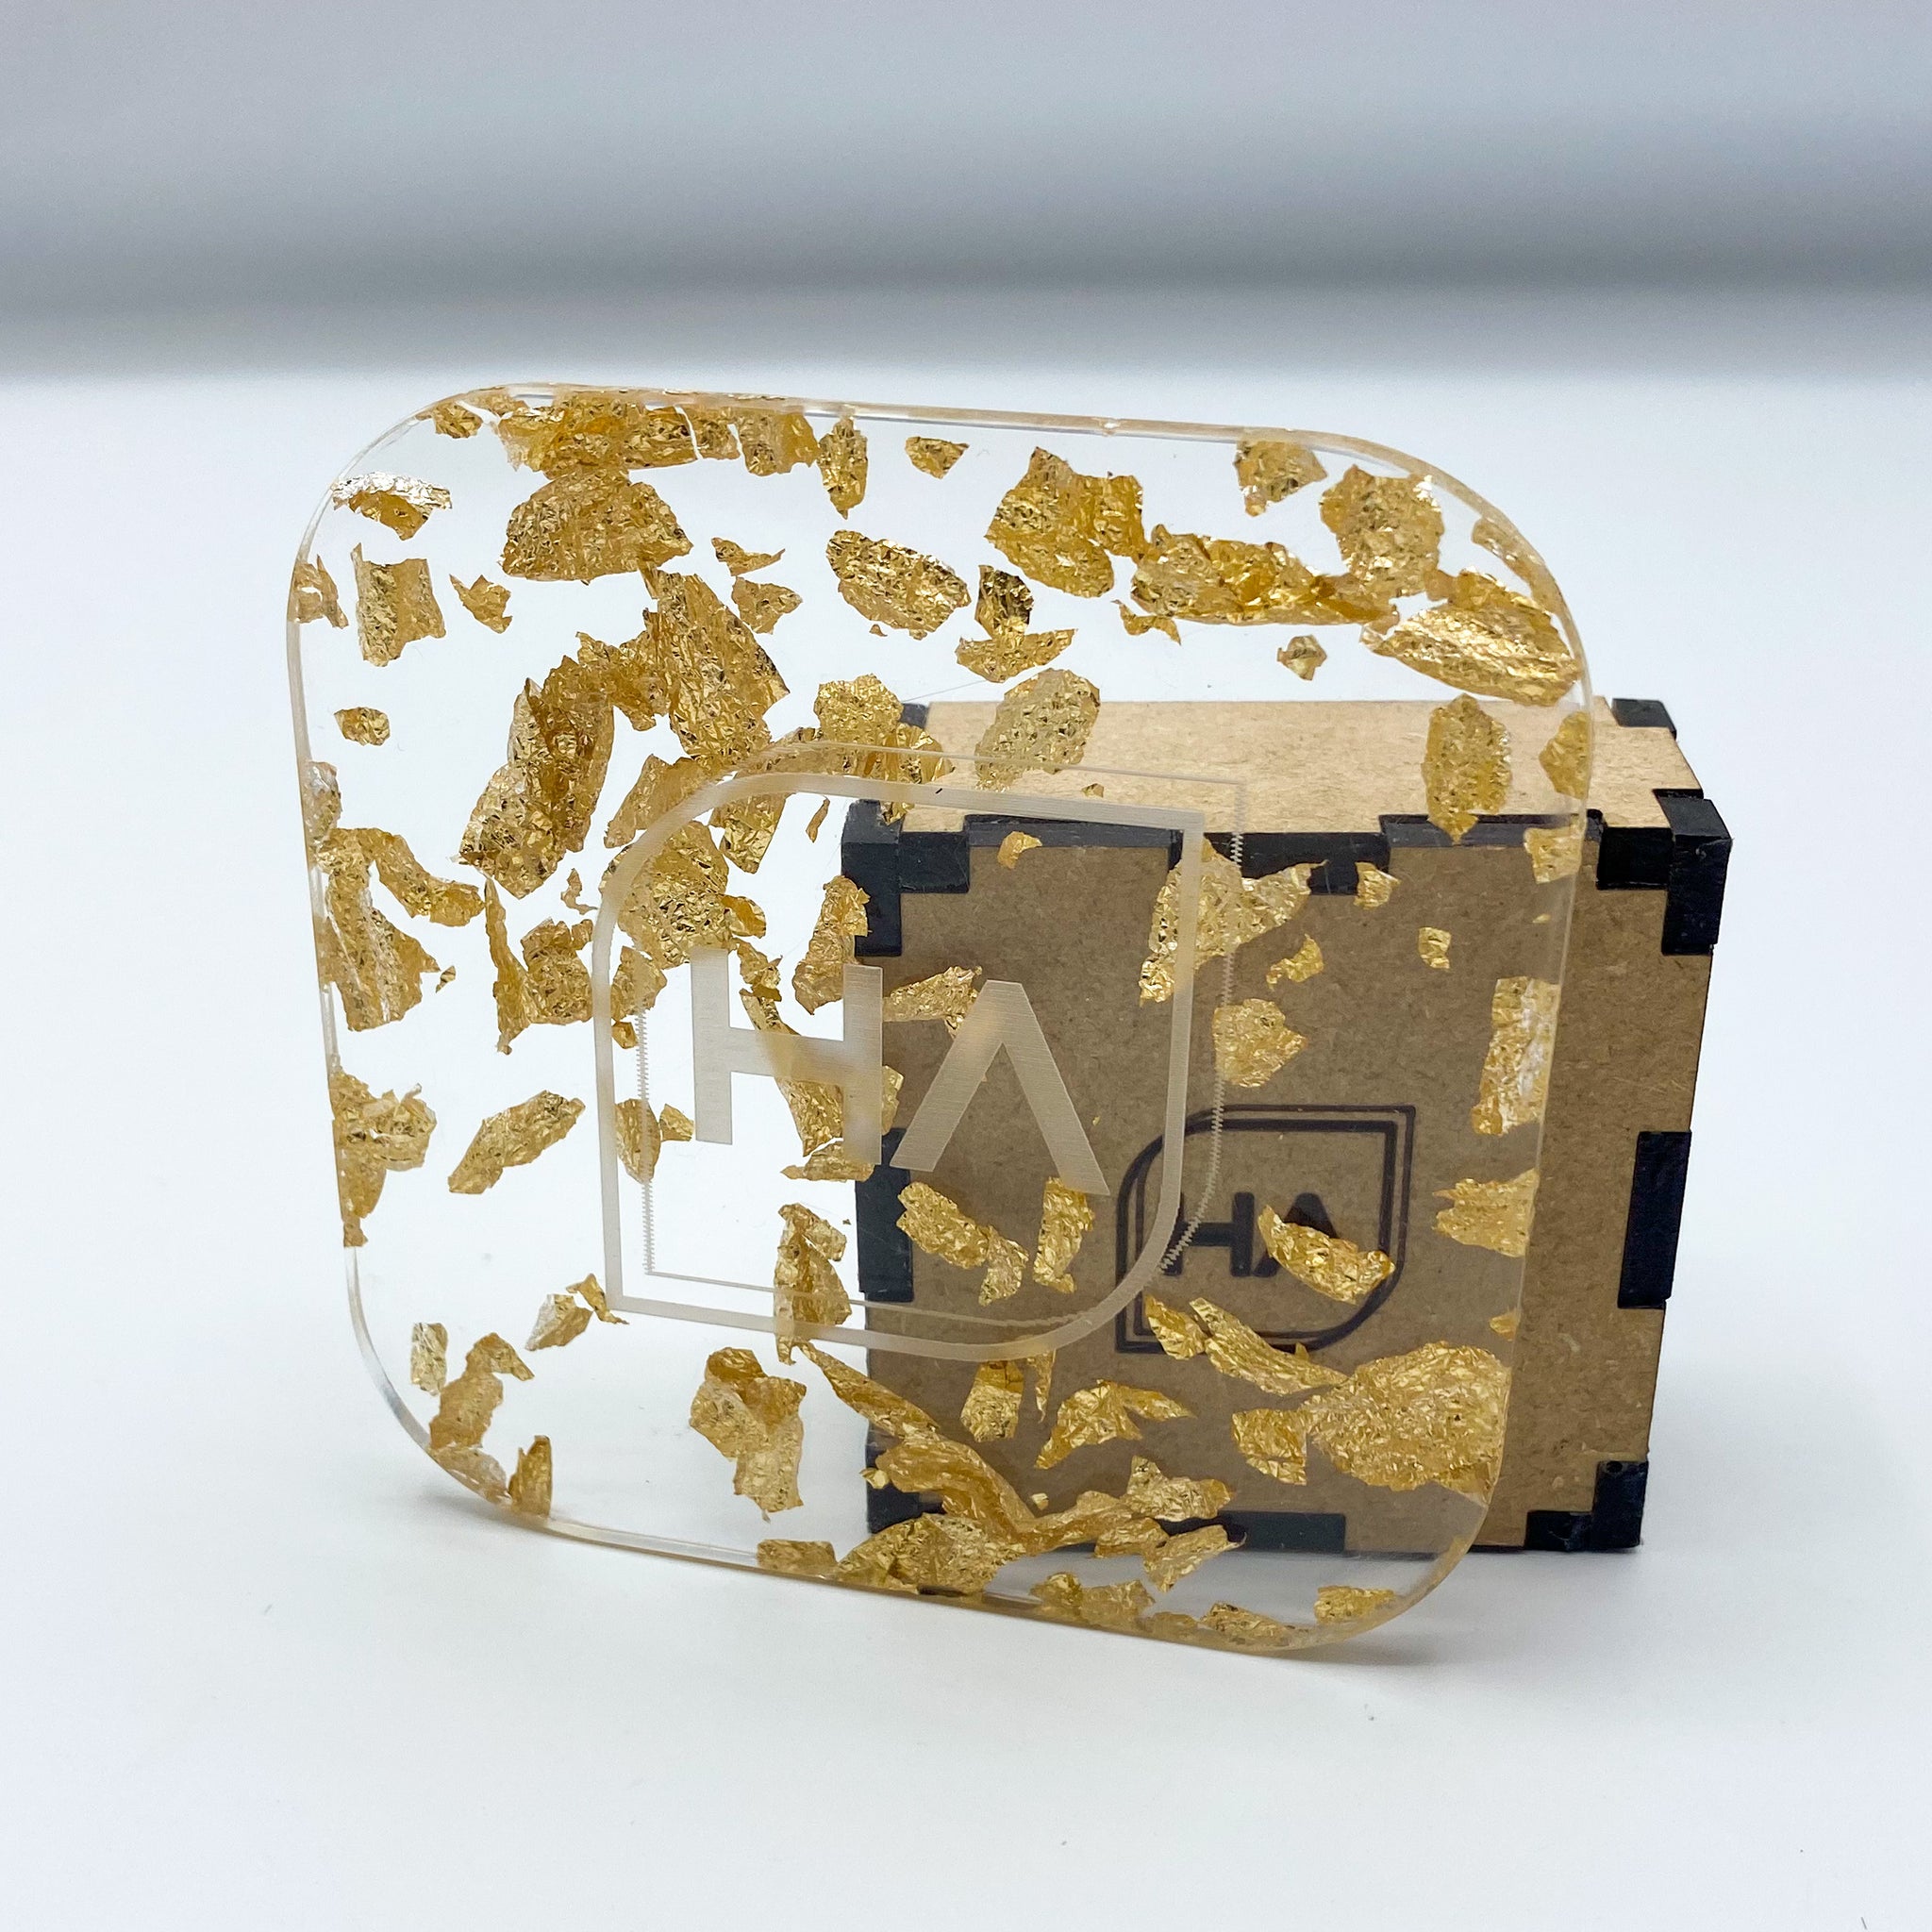 plastic acrylic square gold mirror sheet